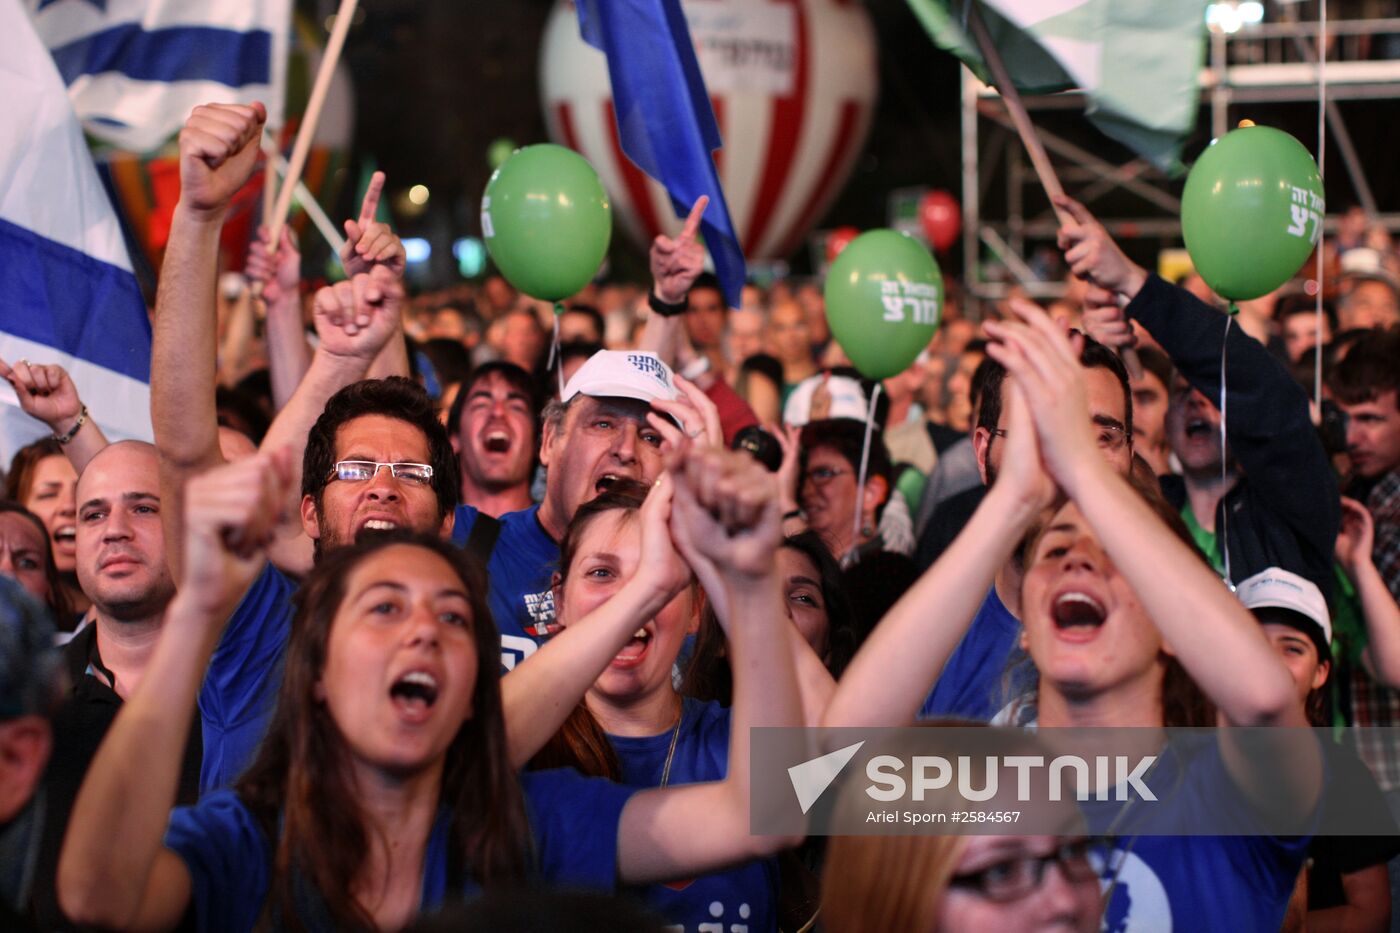 Rally against current political regime in Tel Aviv